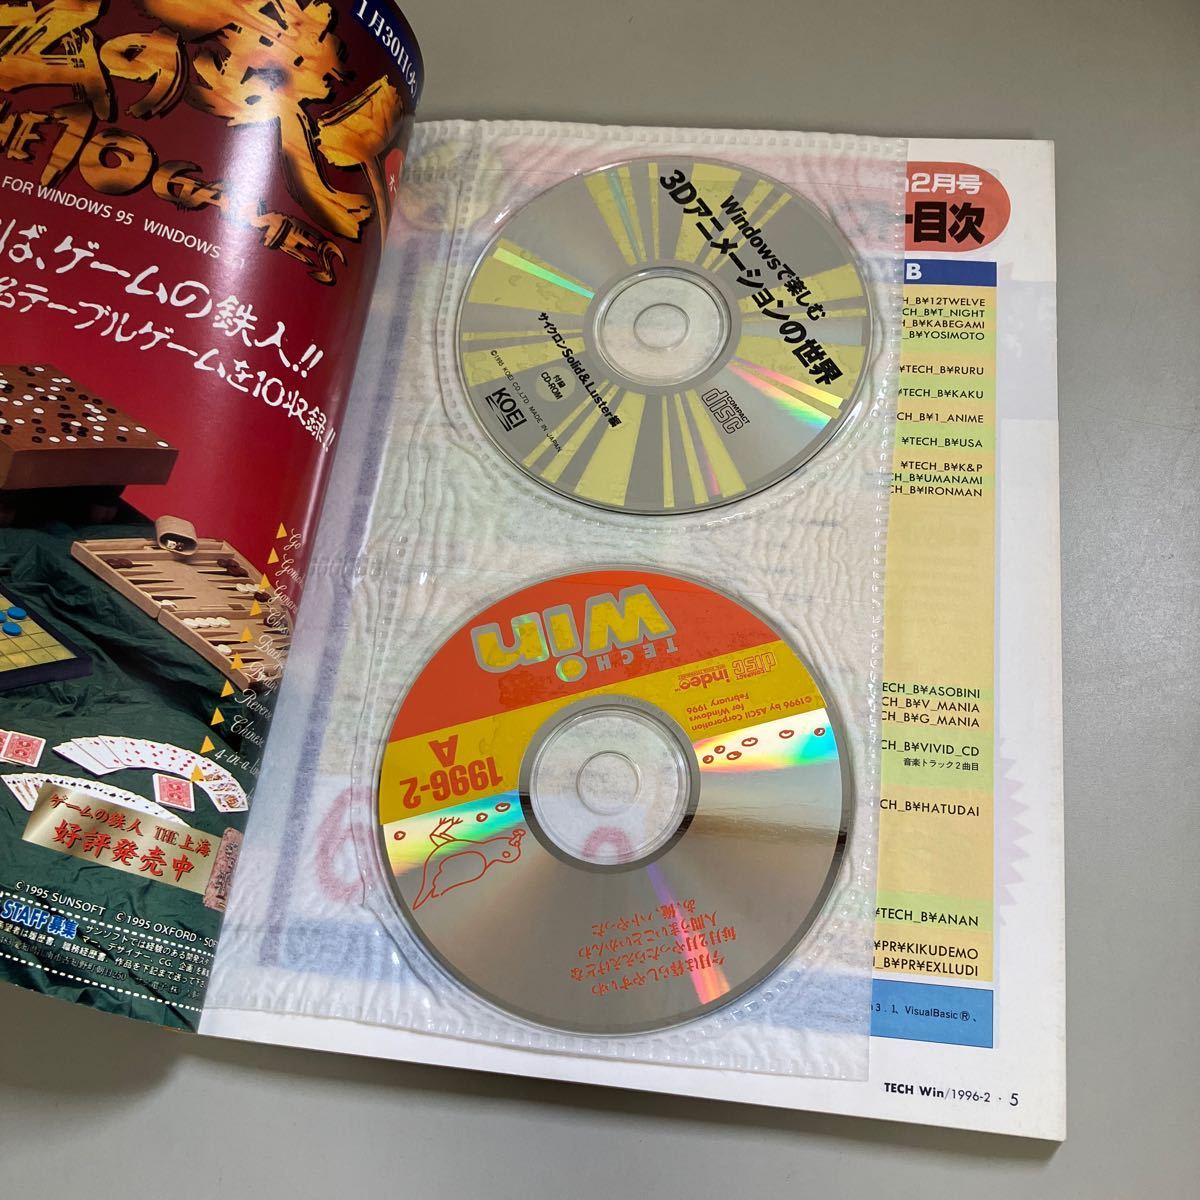 TECH Win テックウィン 1996年 2月号 CD-ROM2枚付 アスキー●ビルゲイツ/新作ソフト体験版/バトルビースト/レベルアサルト●A3576-8